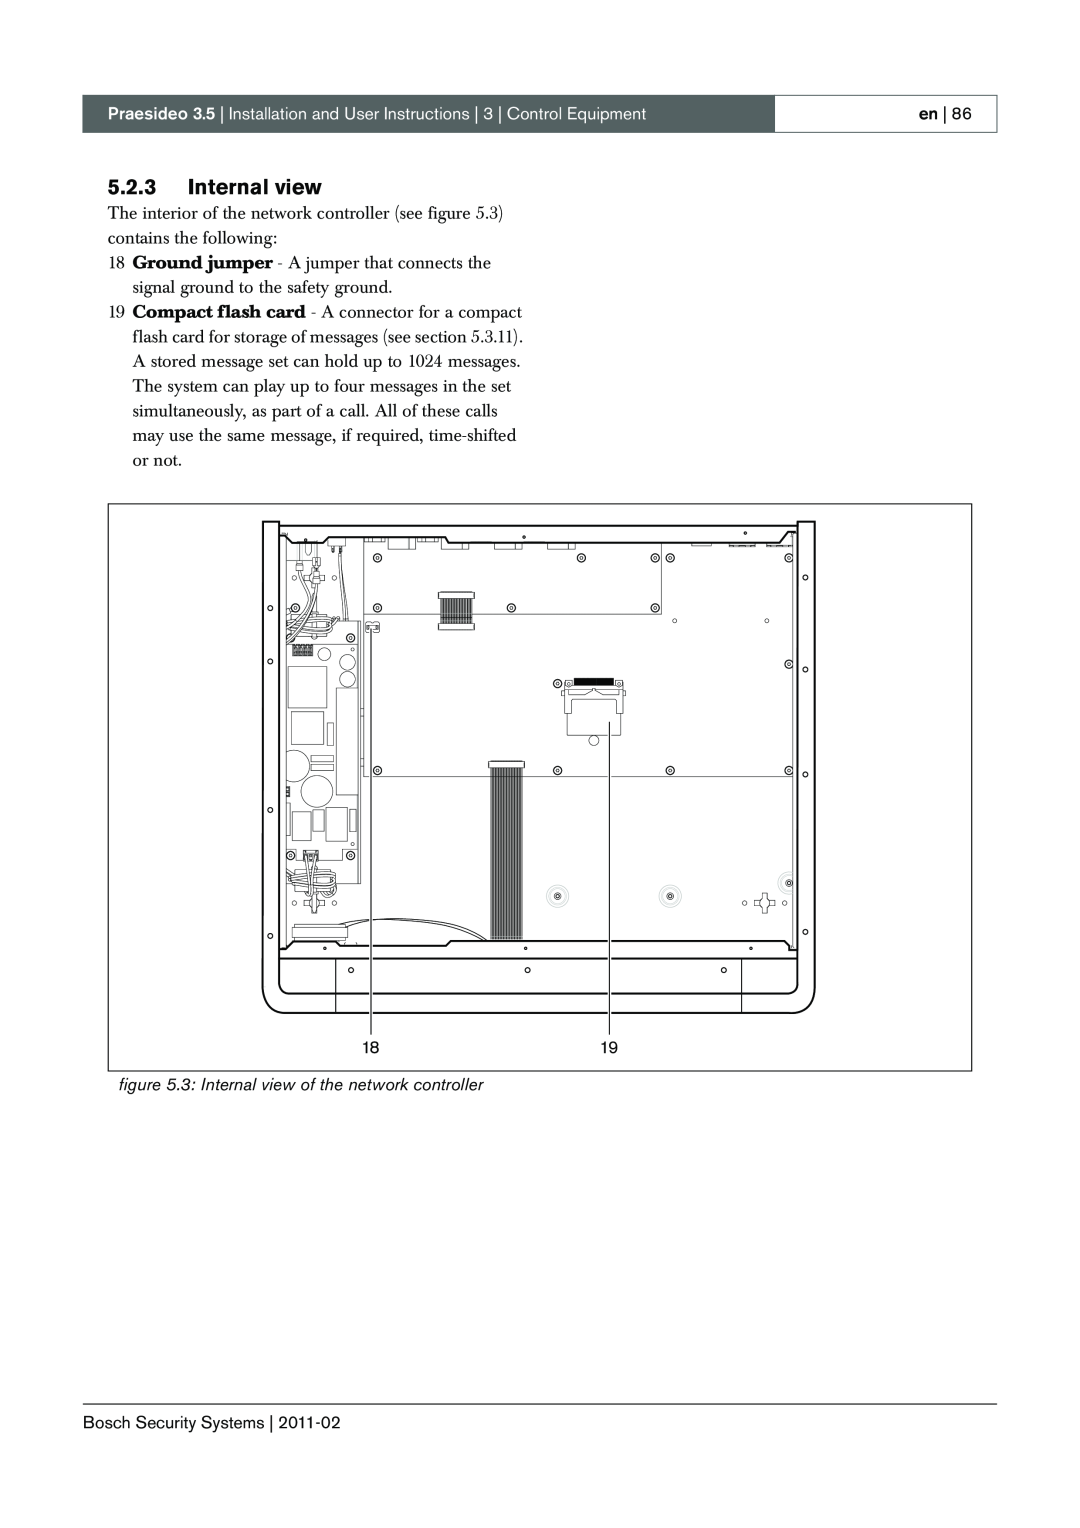 Bosch Appliances 3.5 manual 5.2.3Internal view, en, Bosch Security Systems 